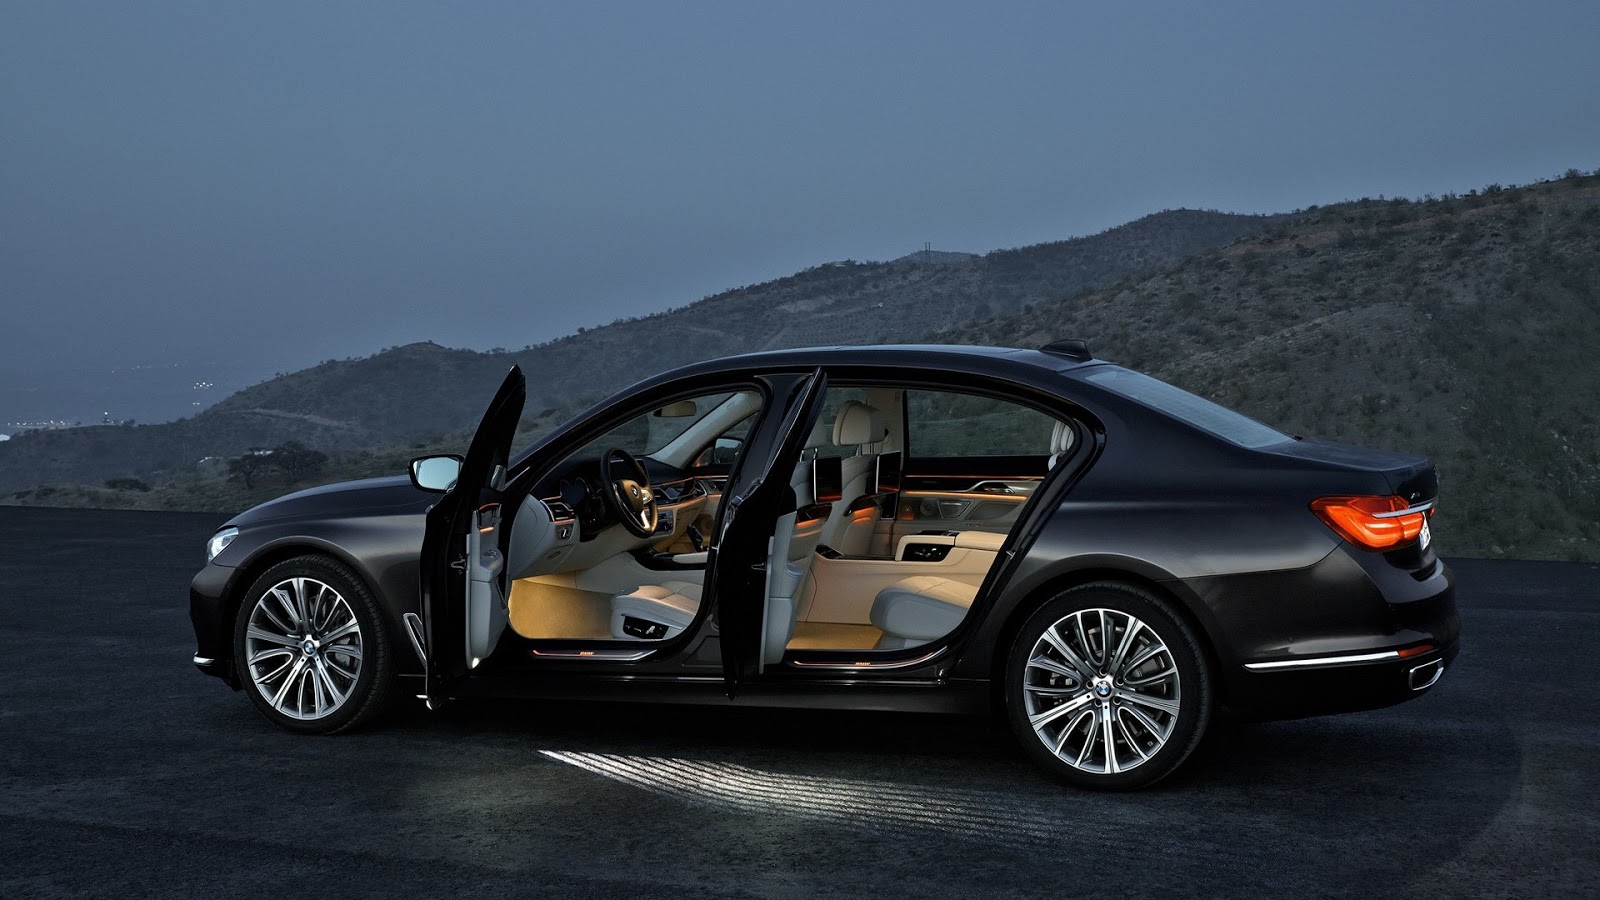 BMW 7serisi 2016 model araba ic tasarimi resimleri rooteto